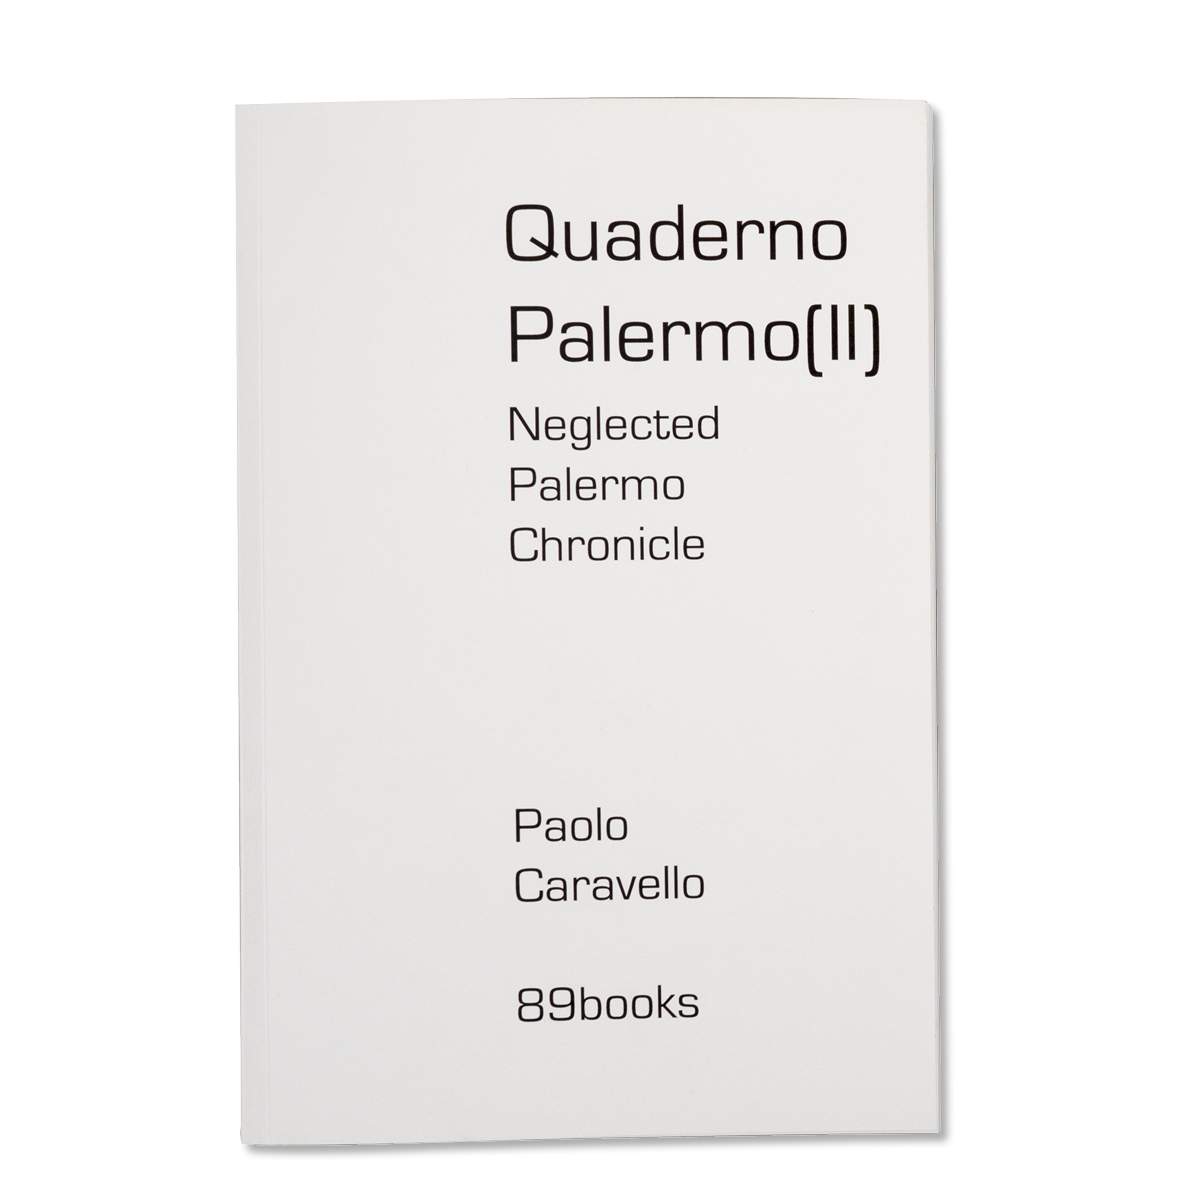 Neglected Palermo Chronicle (Quaderno Palermo II) - Paolo Caravello